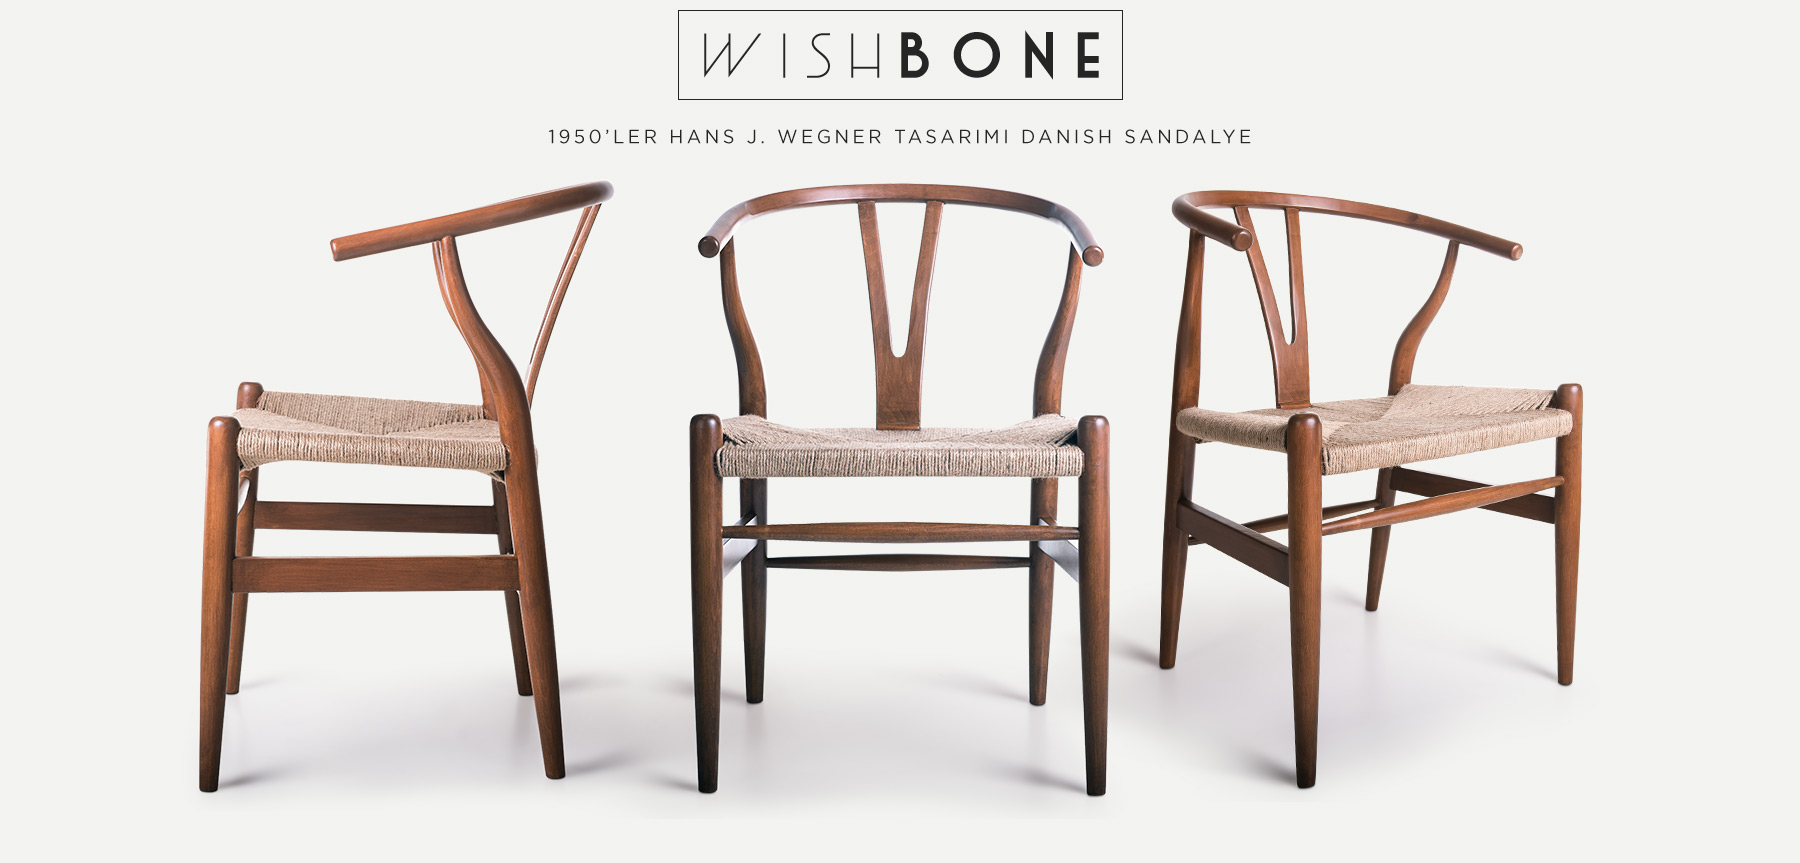 h. wegner ahşap wıshbone danısh™ sandalye'in resmi